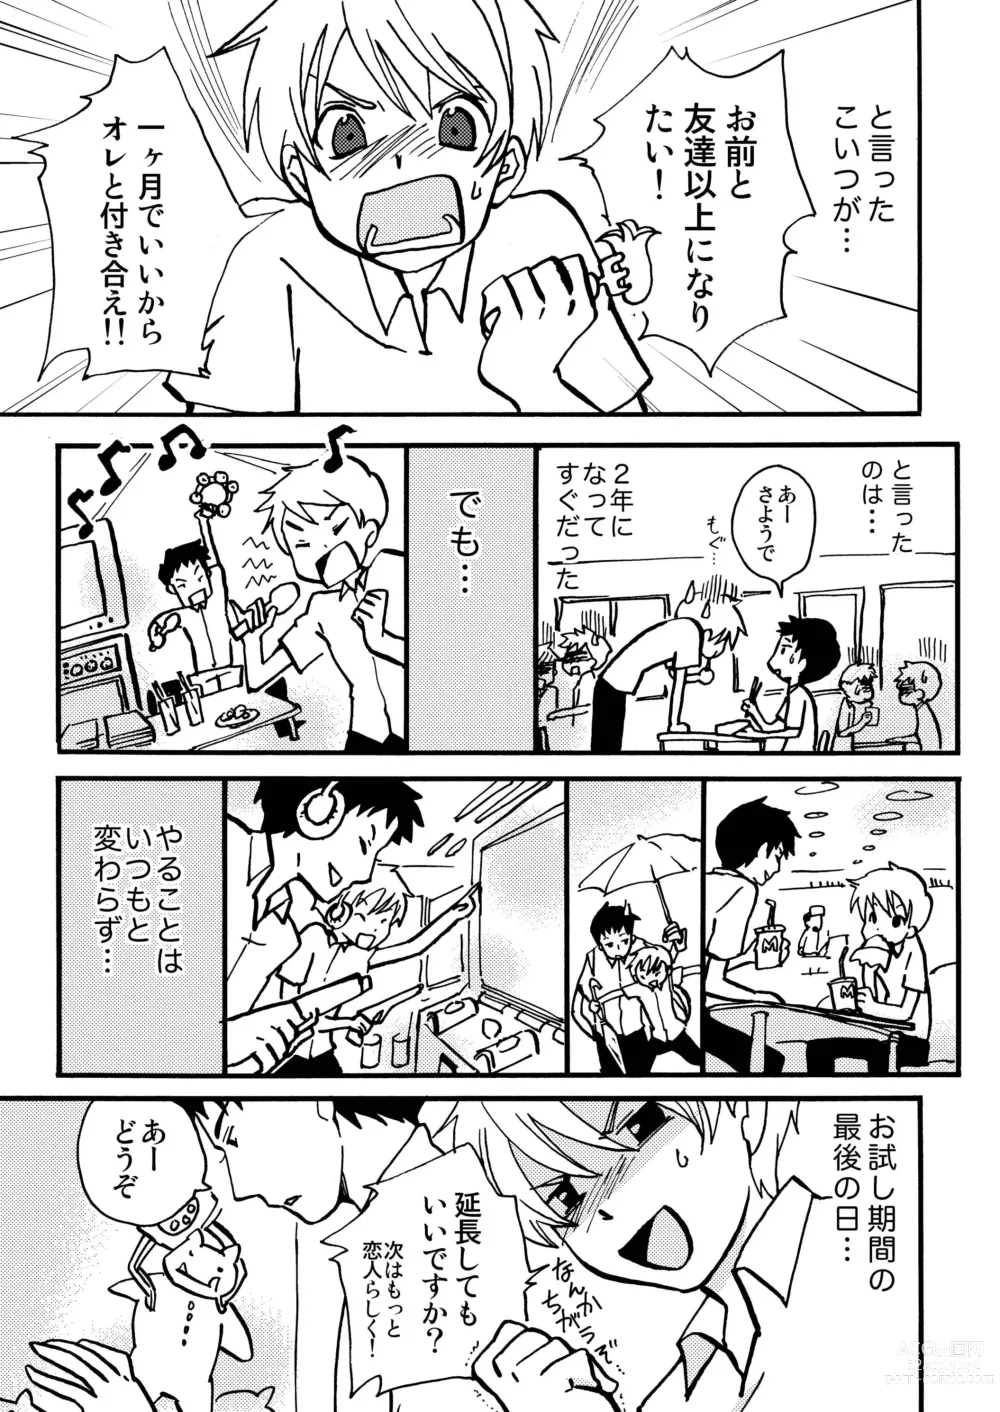 Page 39 of doujinshi Suki!